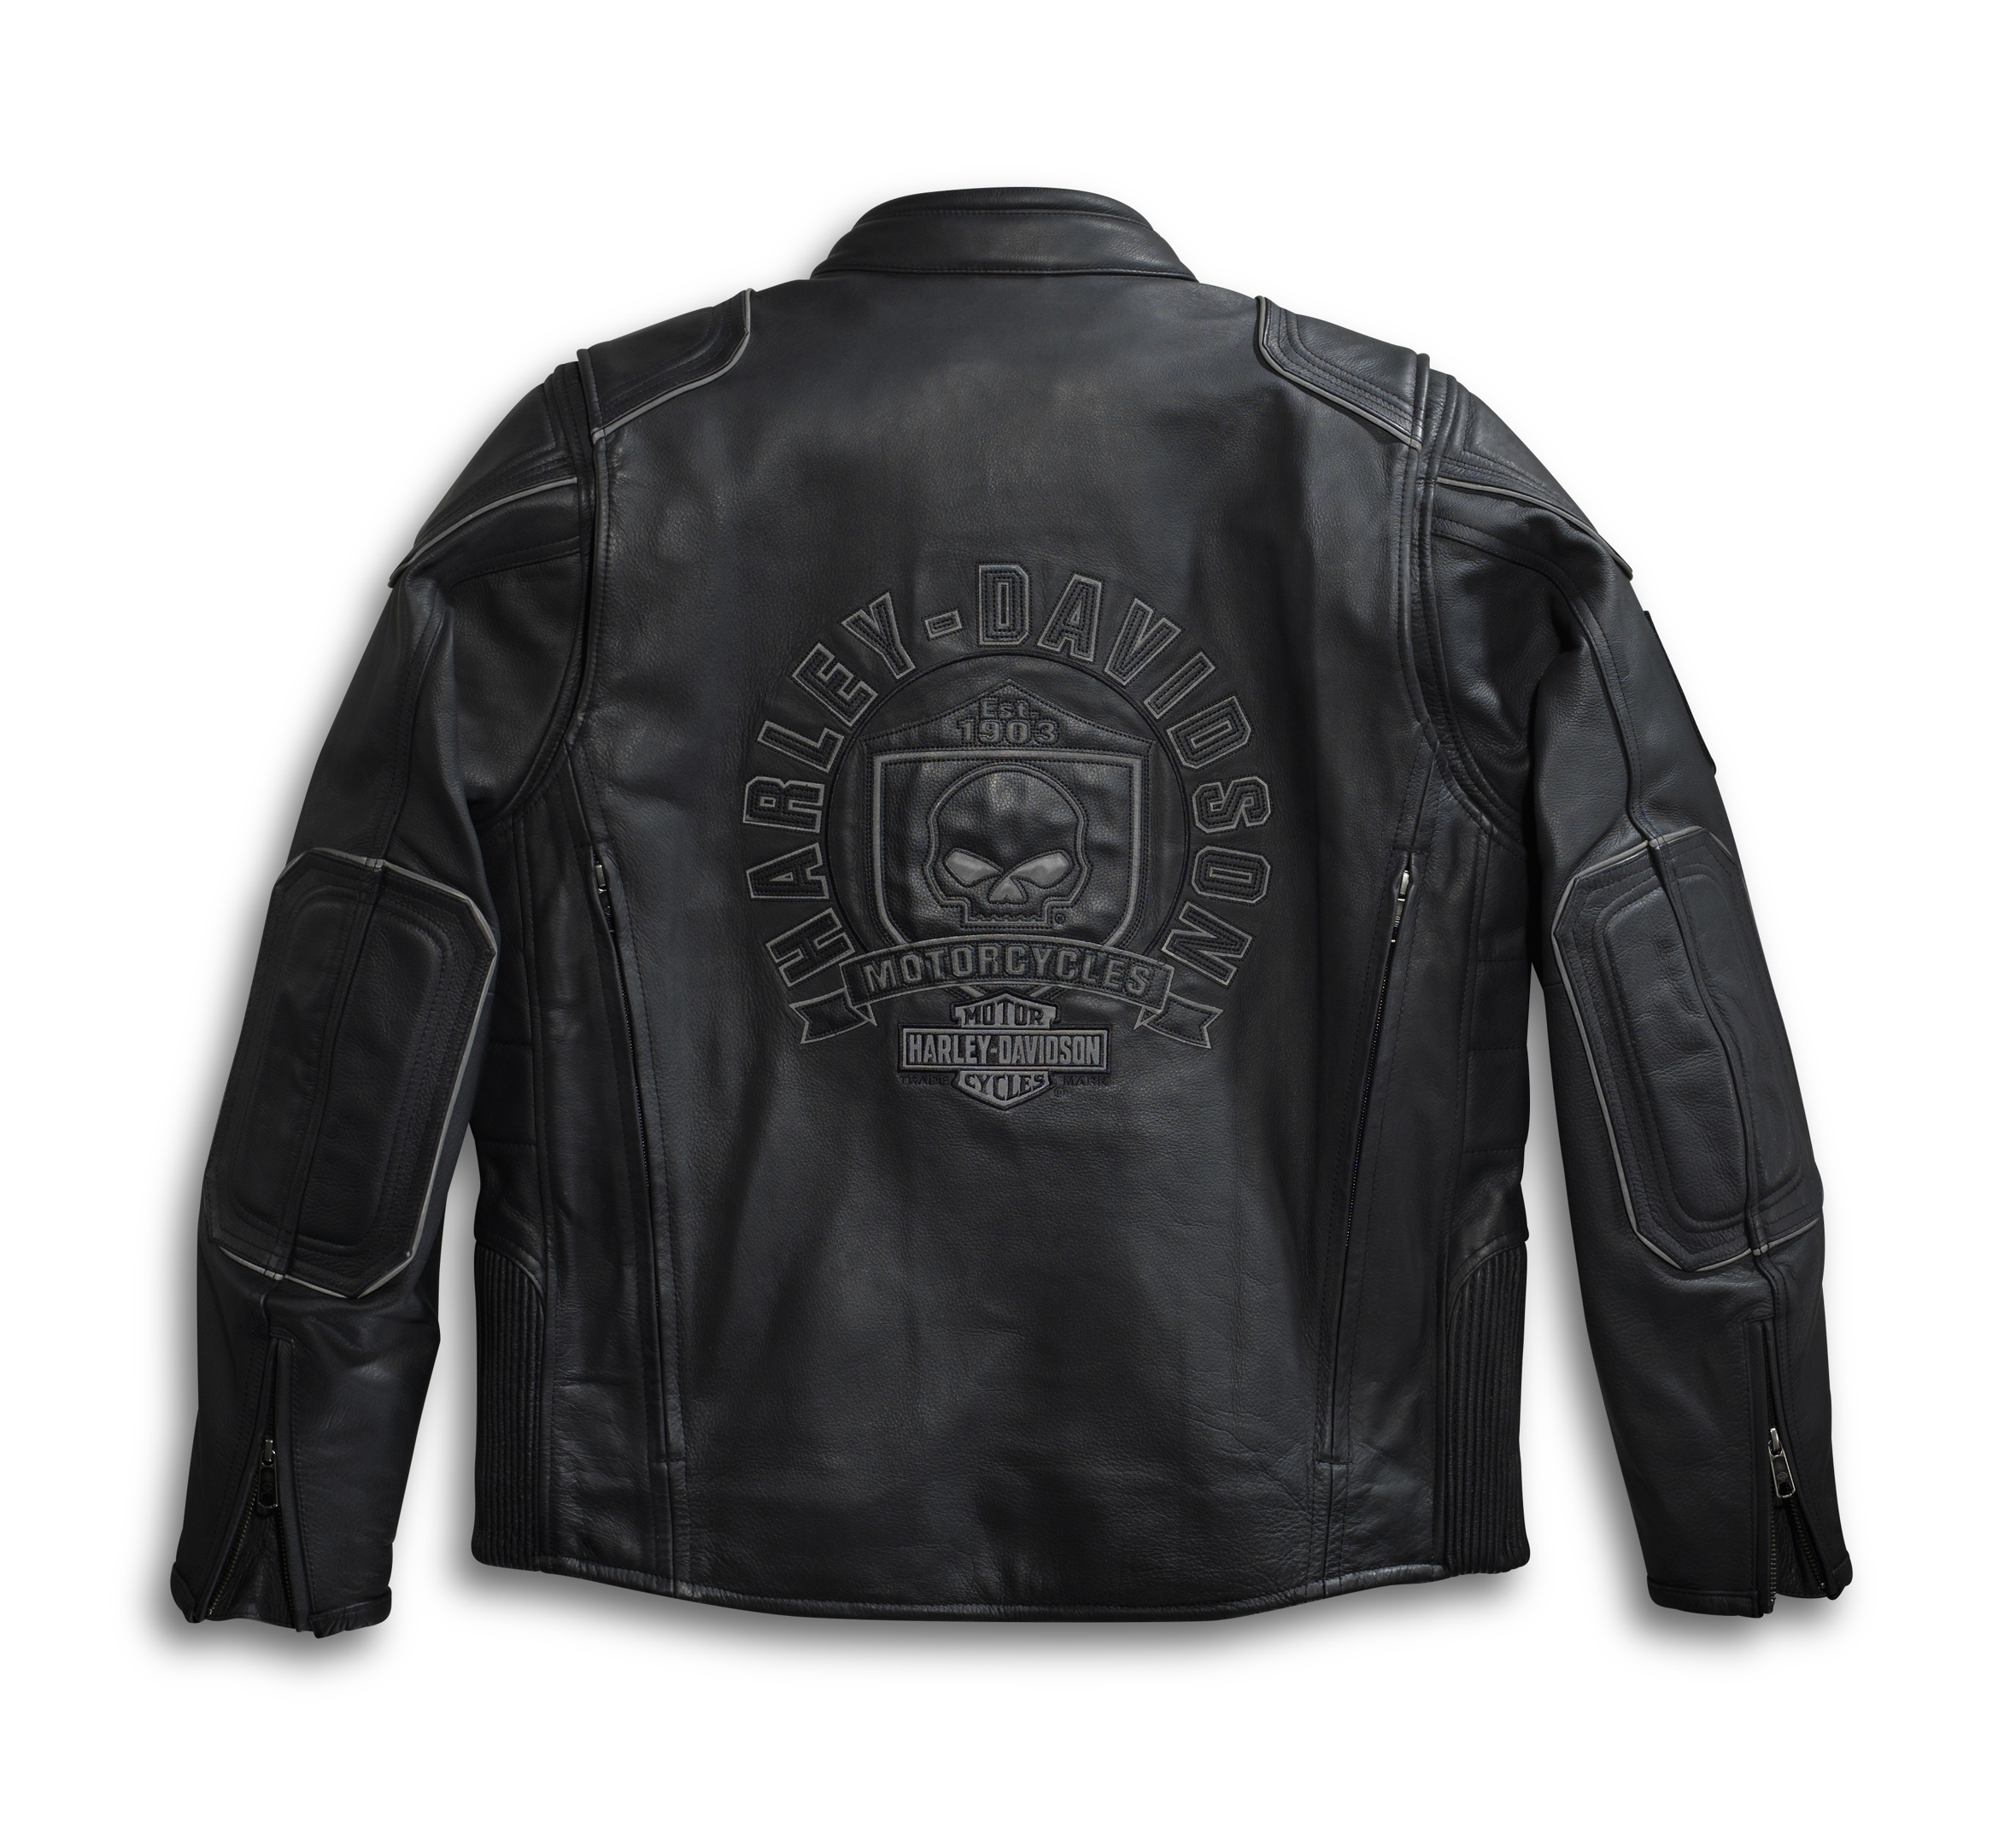 Harley Davidson Motorcycle Jacket Size Men's Medium - Maker of Jacket